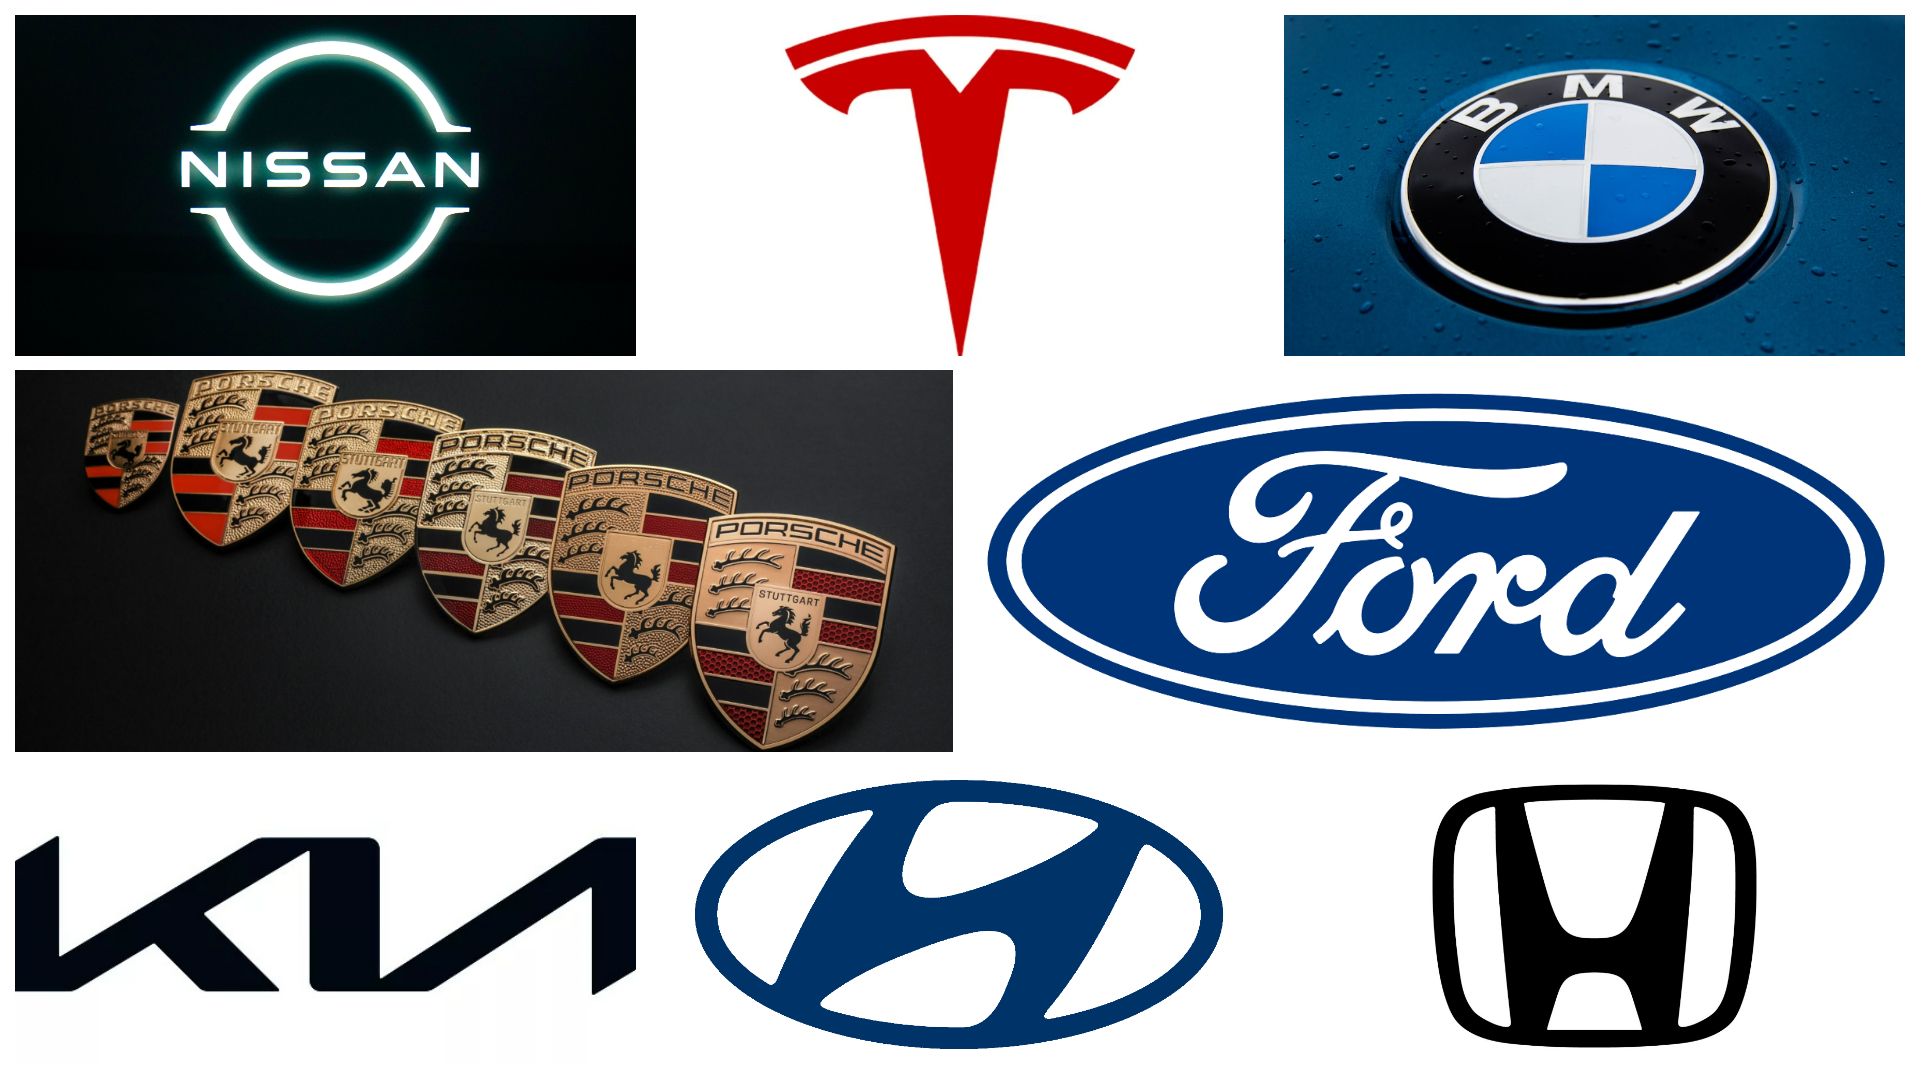 New Car Full: Car Logos  Car brands logos, Car logos, Car brands